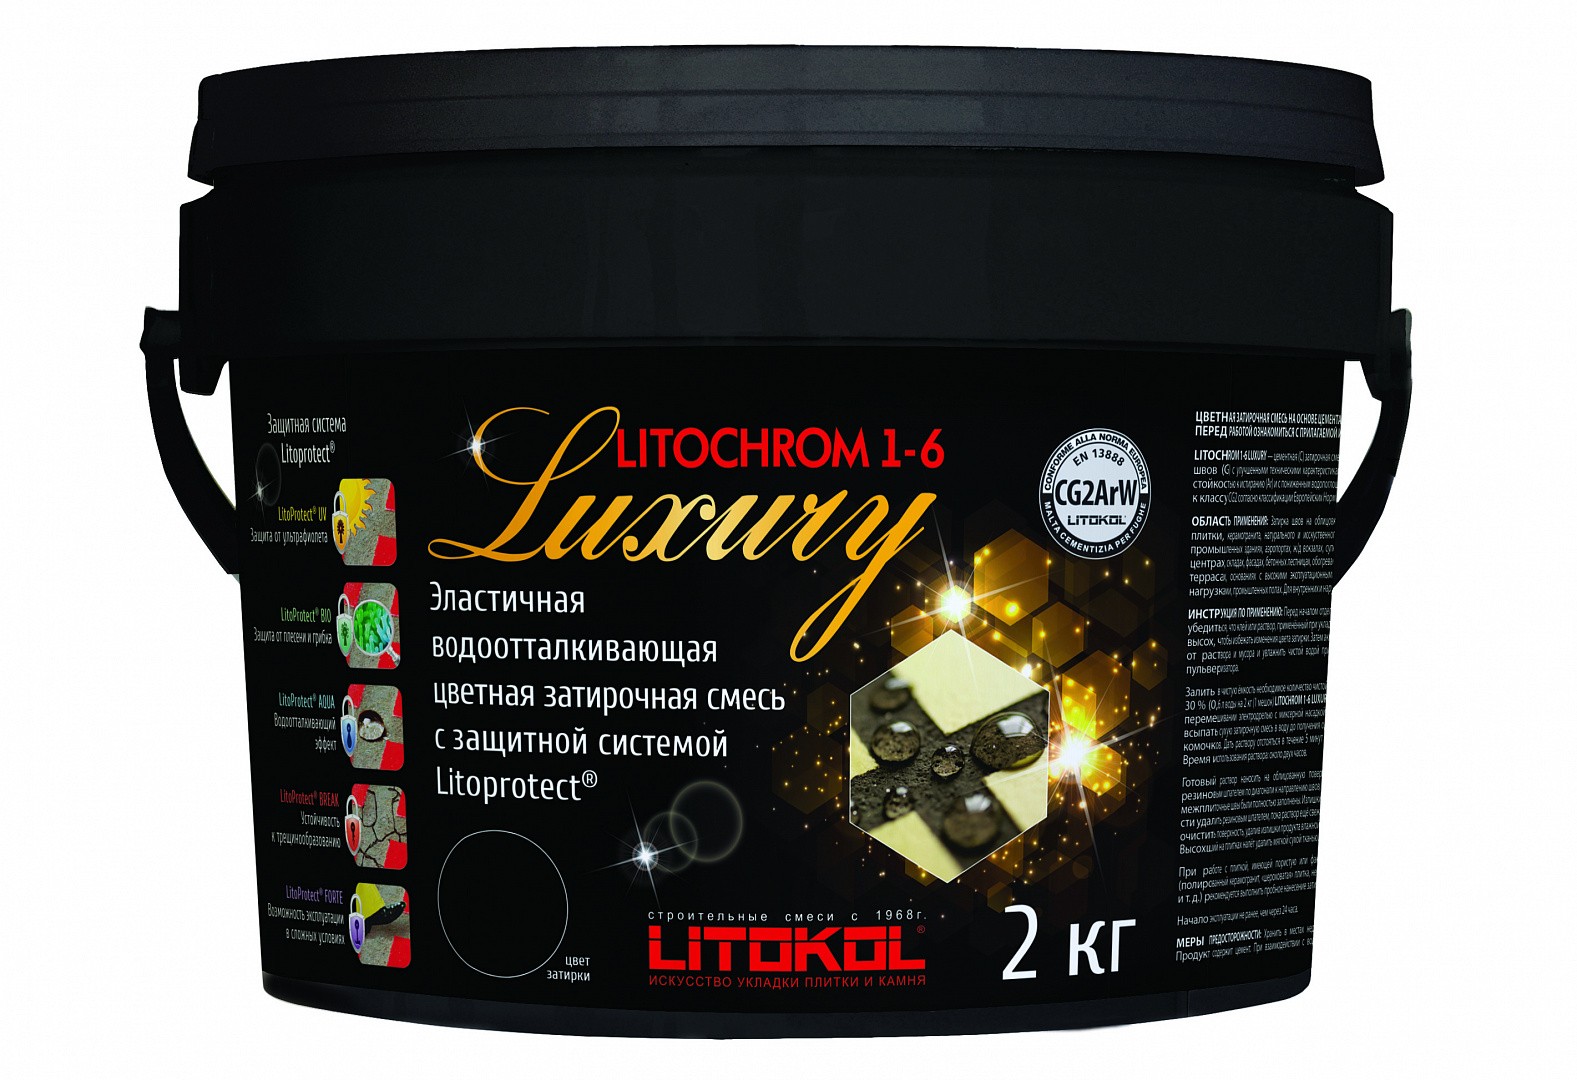 Цементная затирочная смесь LITOCHROM 1-6 LUXURY C.90